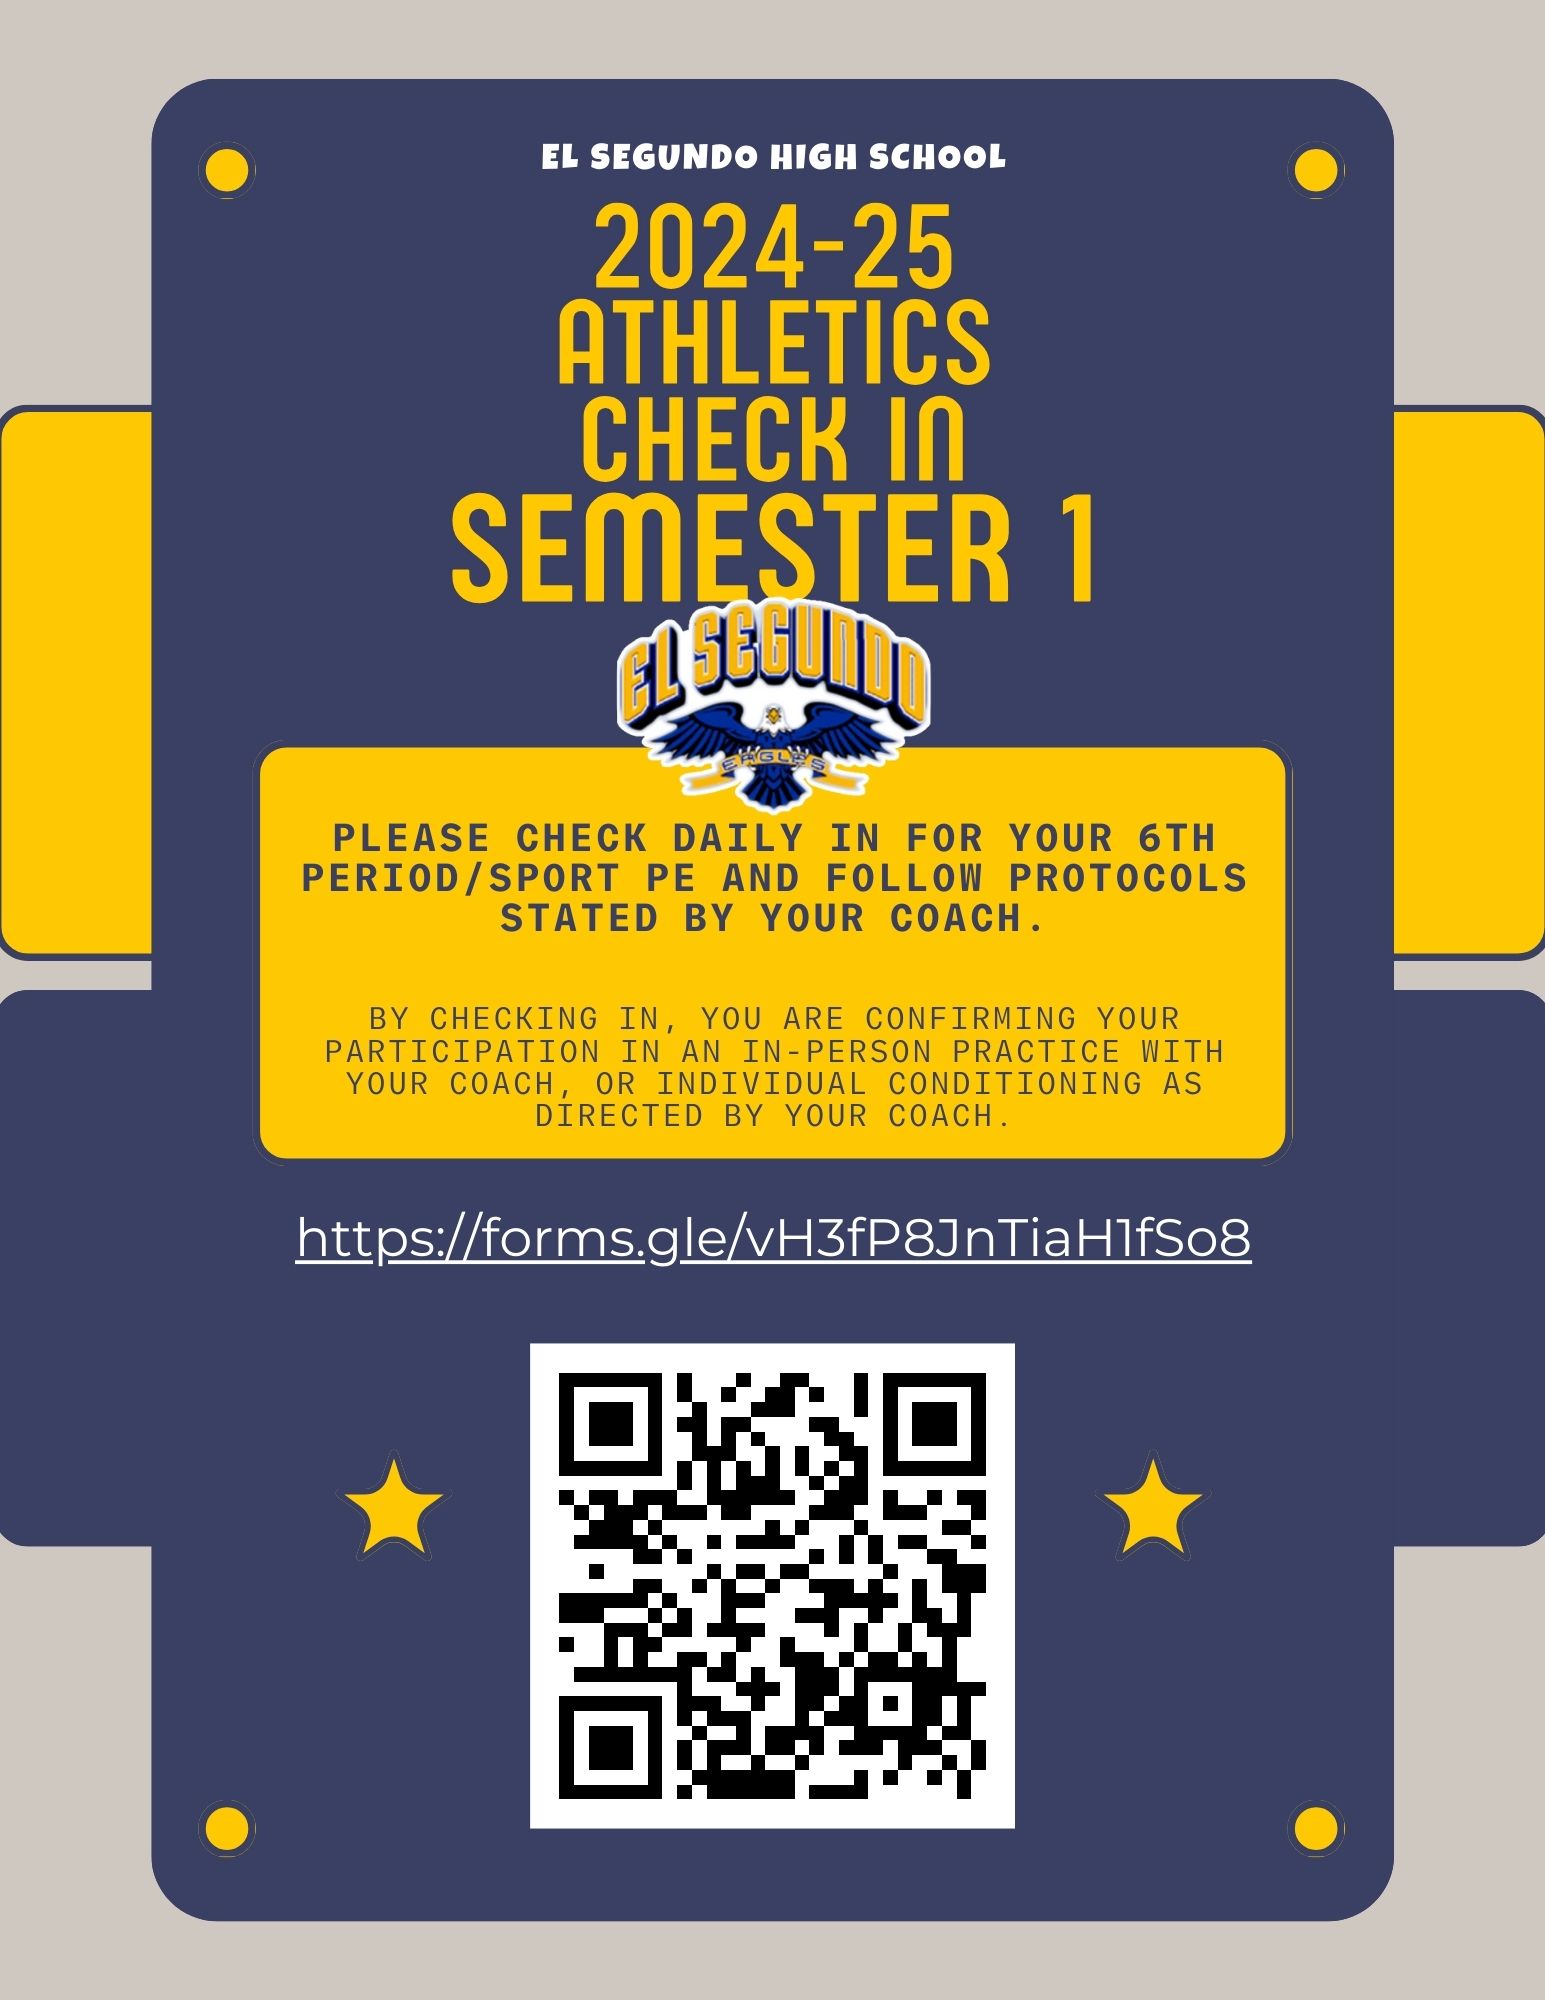 Athletic checkin form 2024-25 semester 1